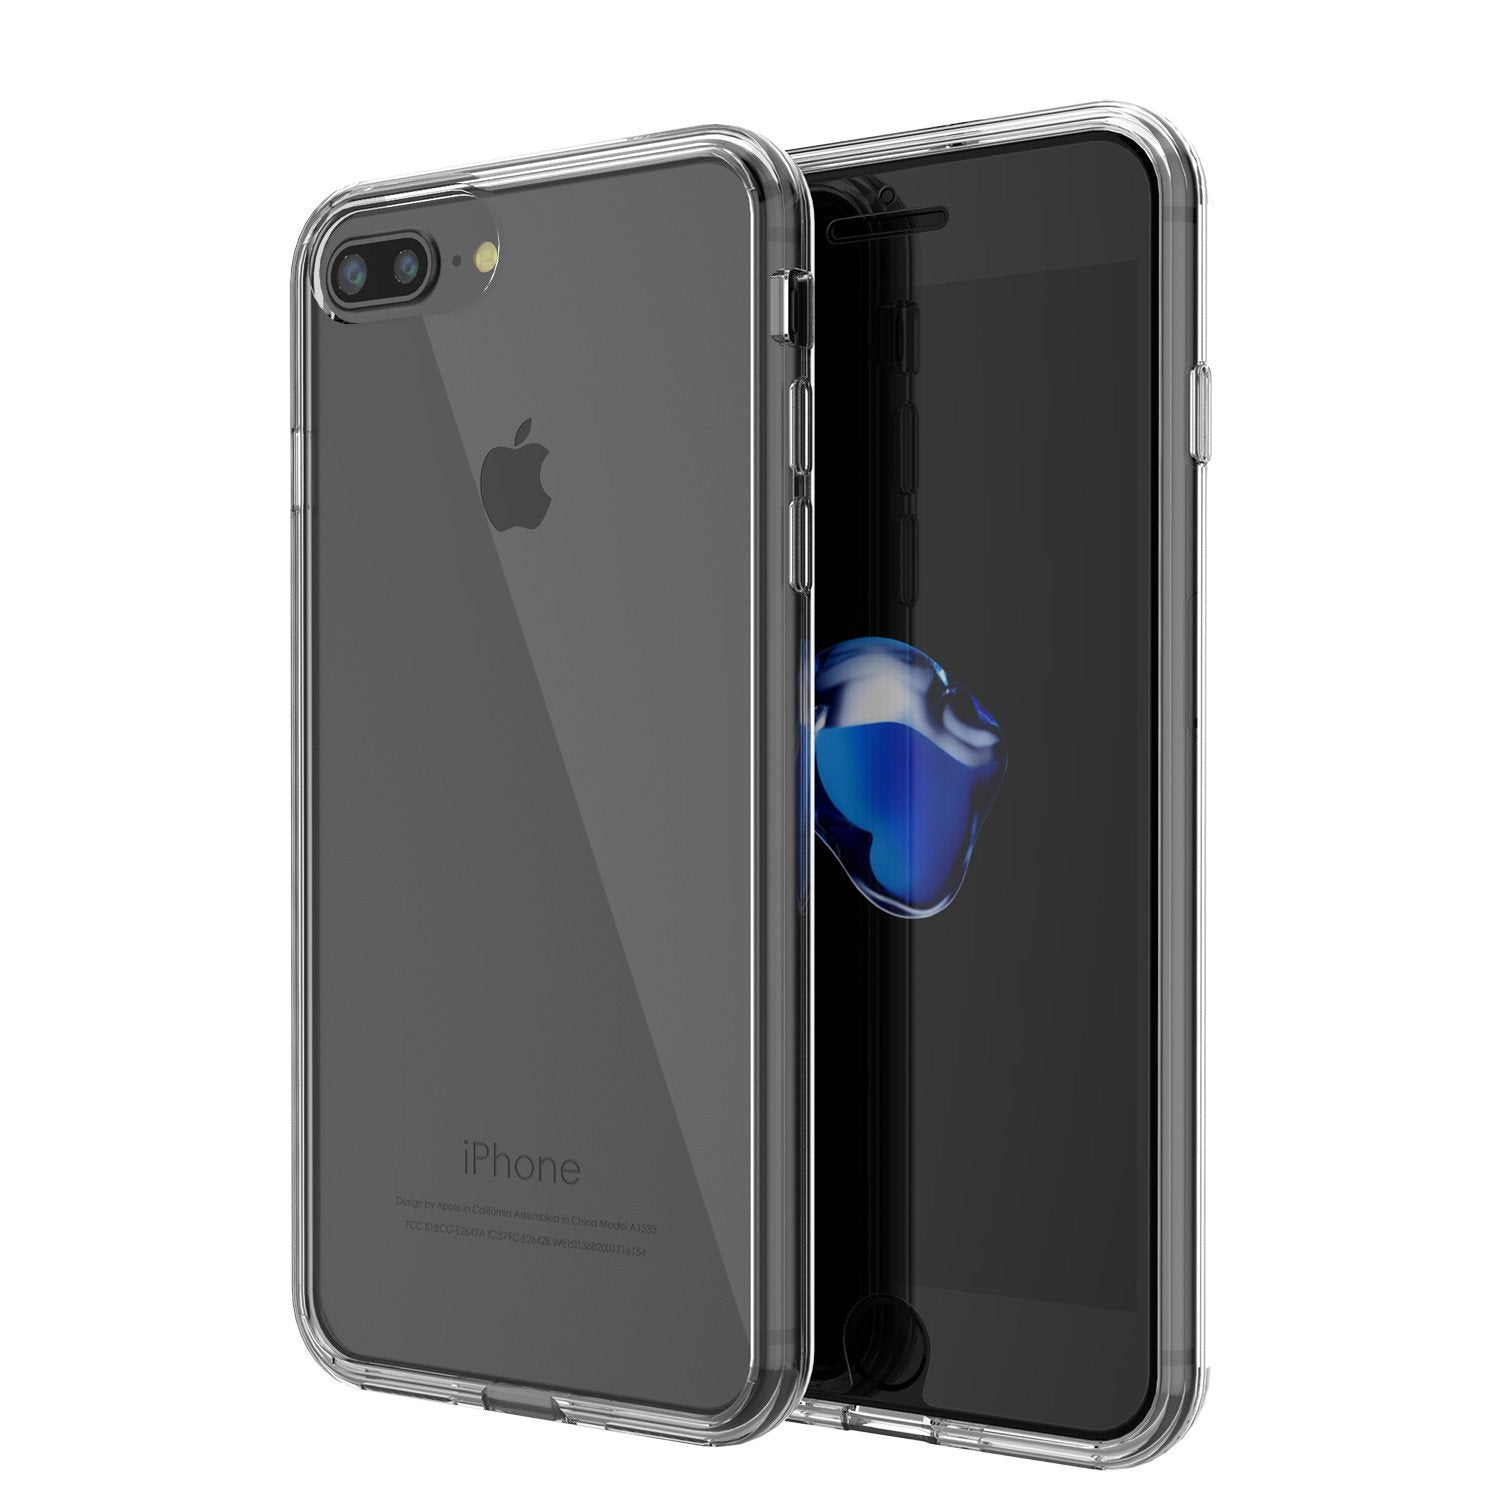 iPhone 8+ Plus Case PunkCase LUCID Clear Series for Apple iPhone 8+ Plus –  punkcase